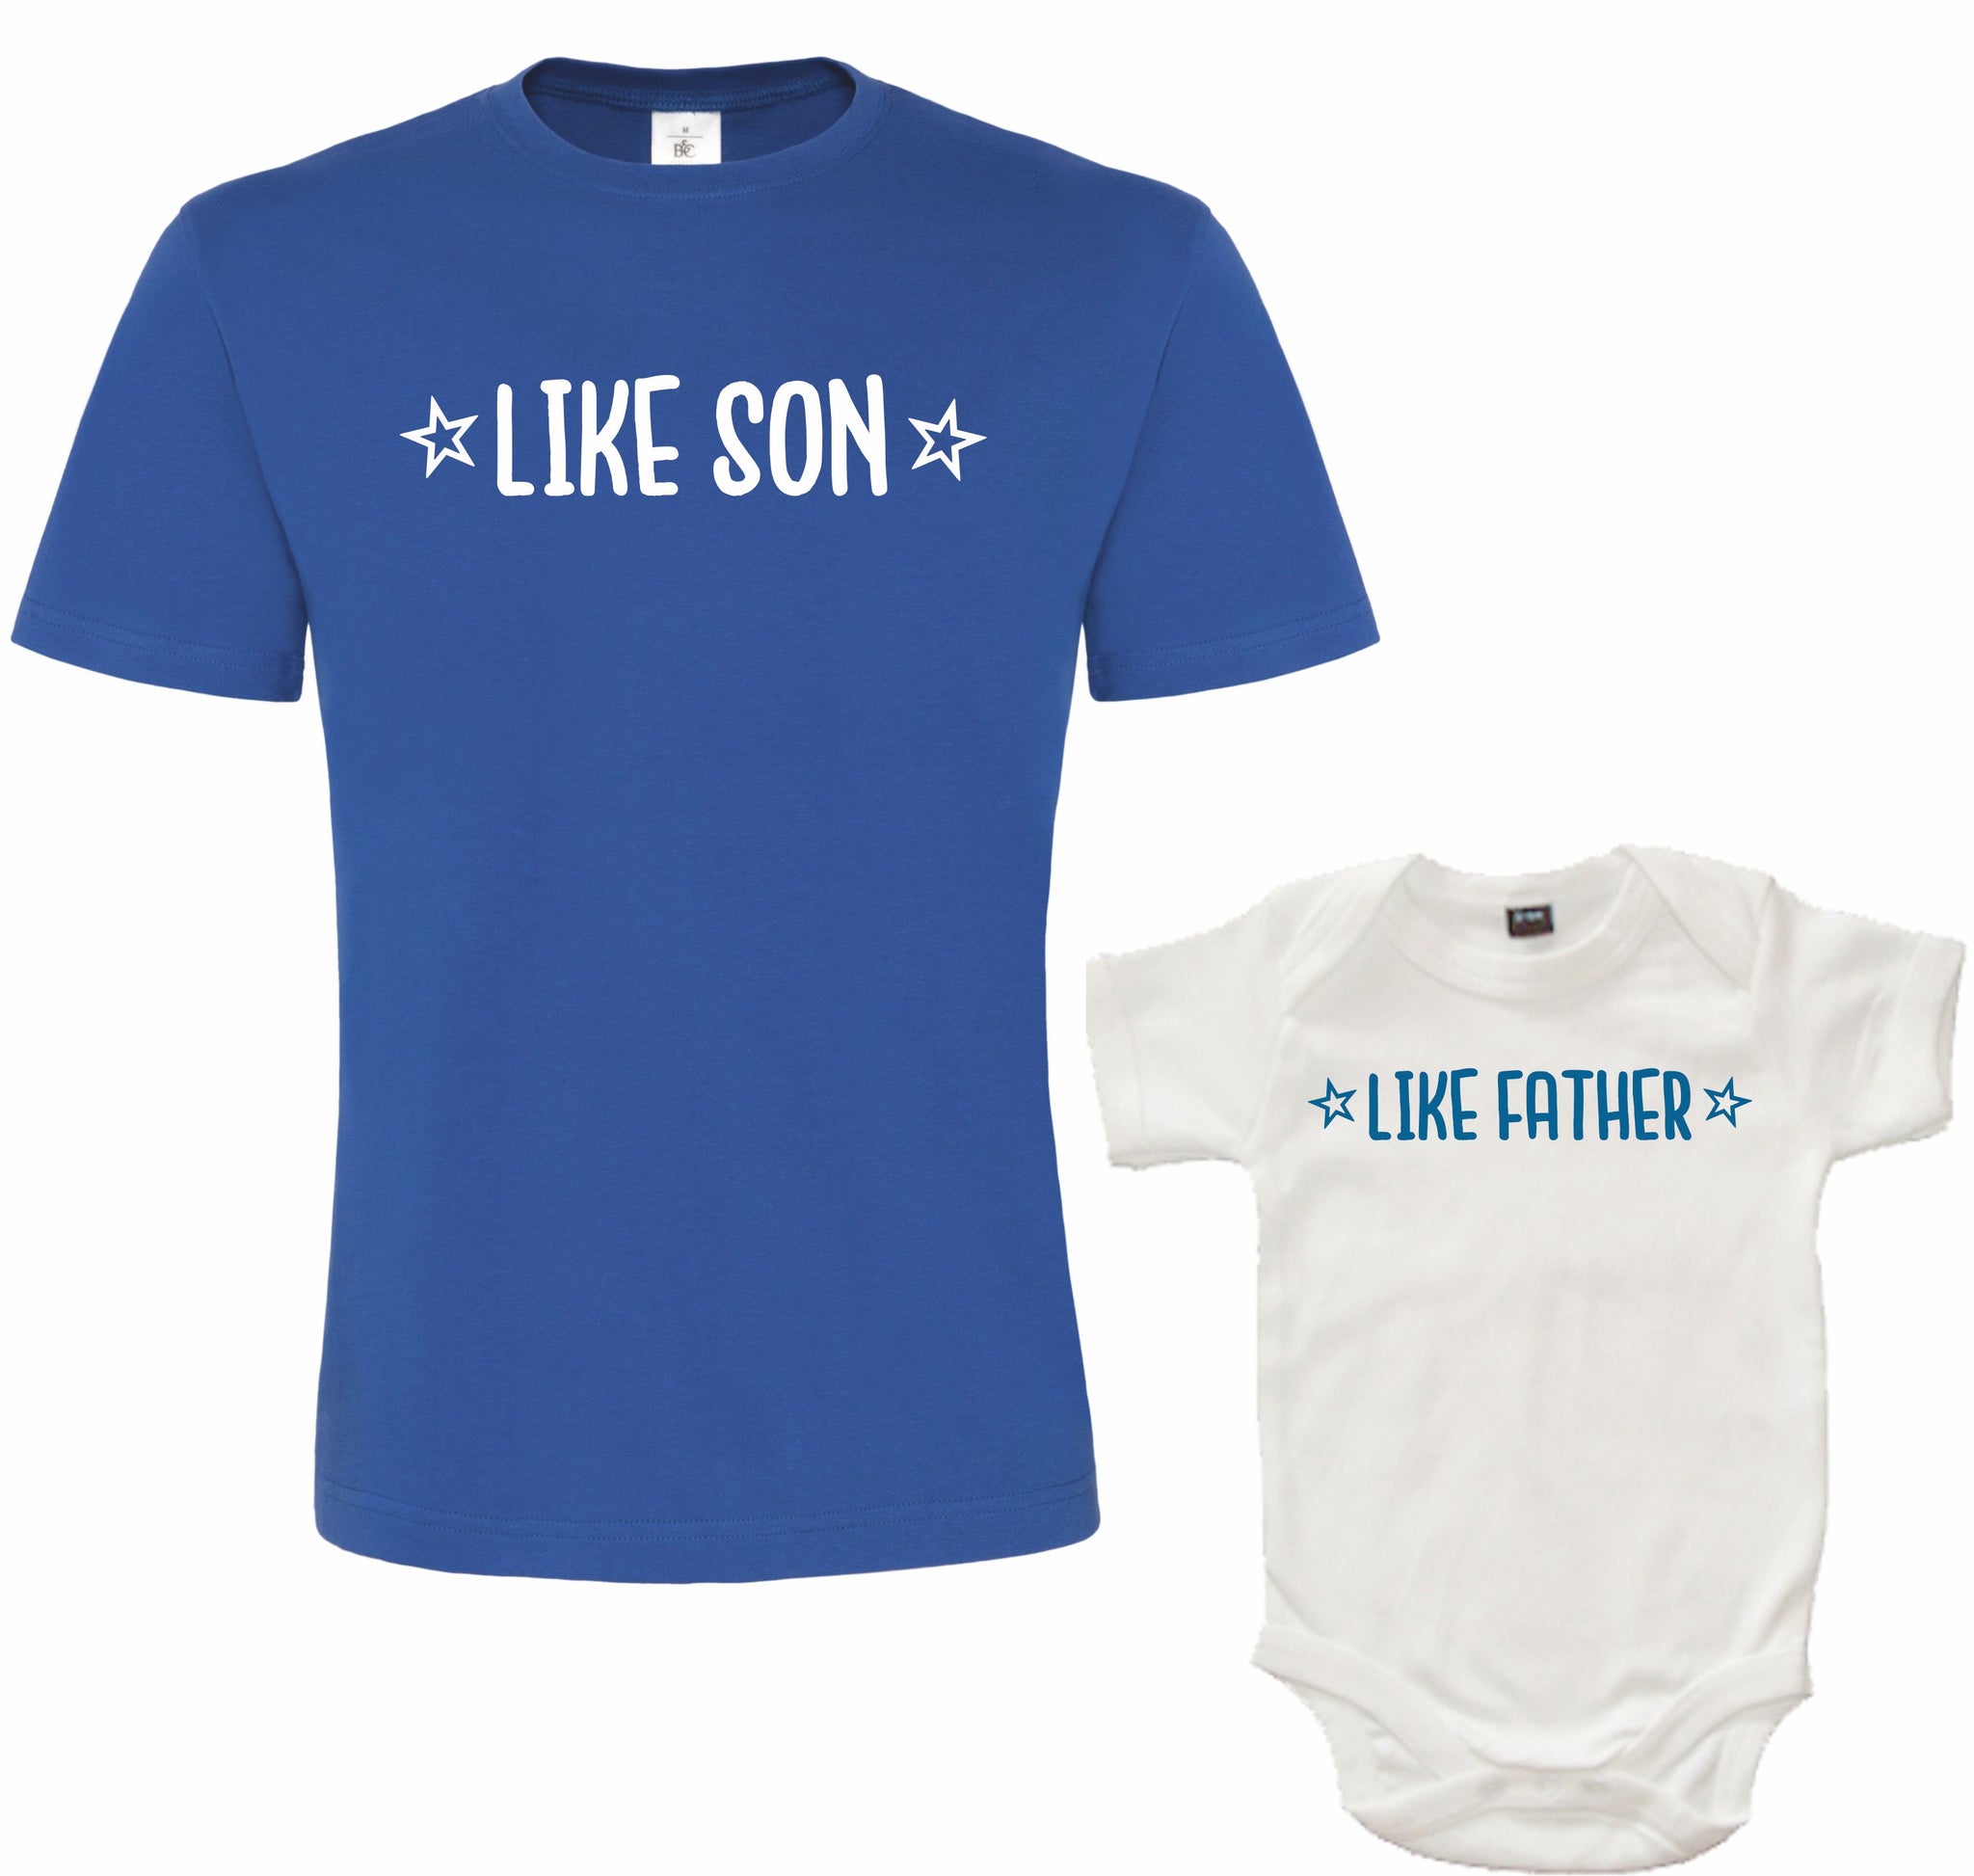 Like Father Like Son Unisex T-Shirt and Baby Bodysuit Set